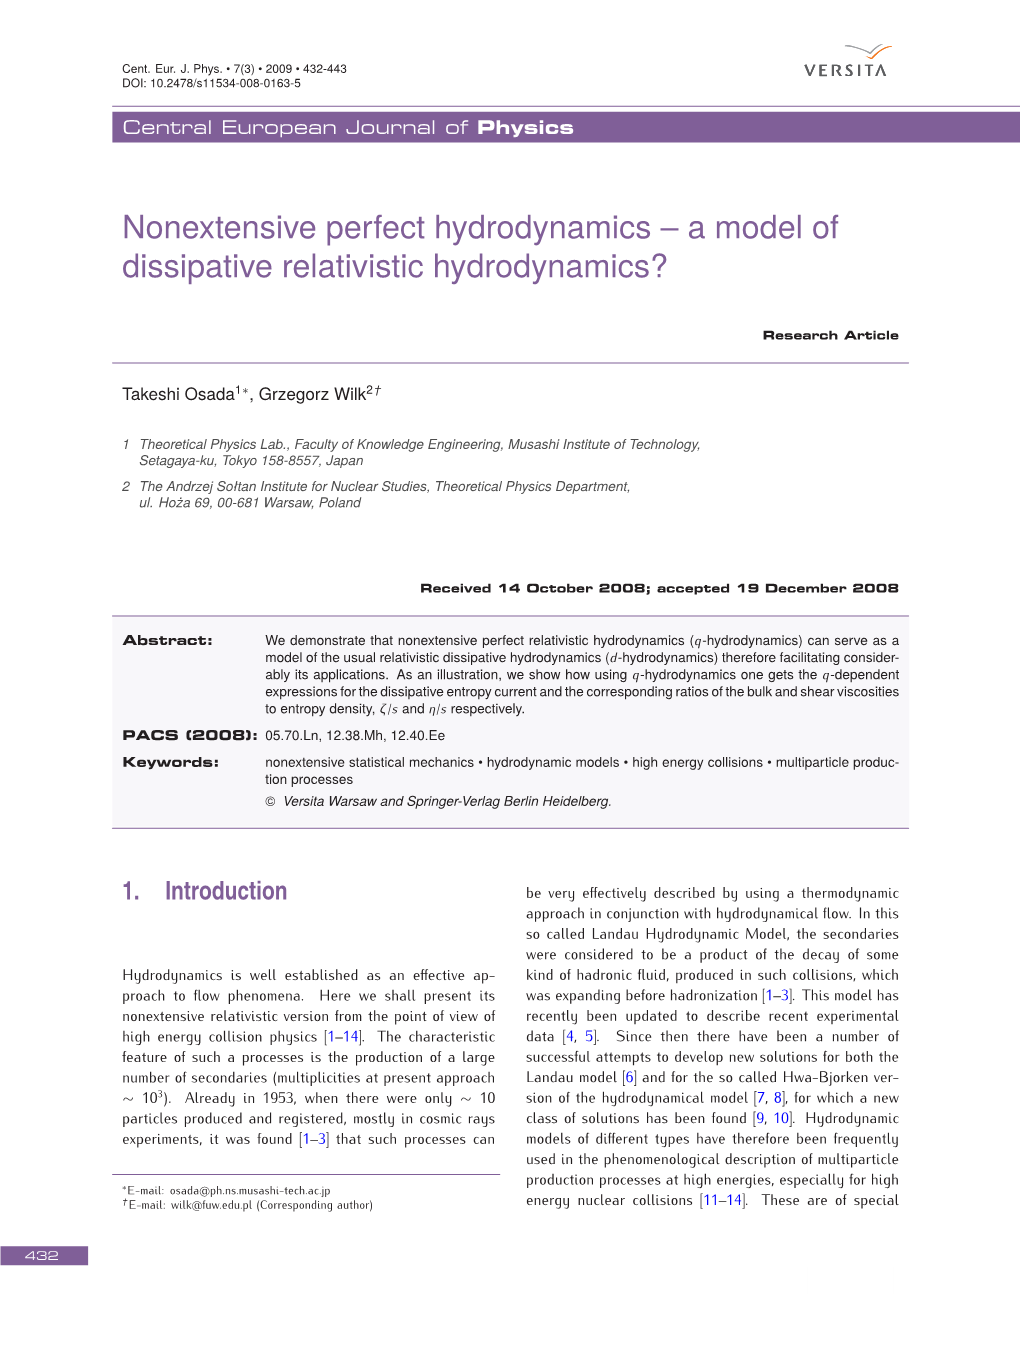 Nonextensive Perfect Hydrodynamics – a Model of Dissipative Relativistic Hydrodynamics?